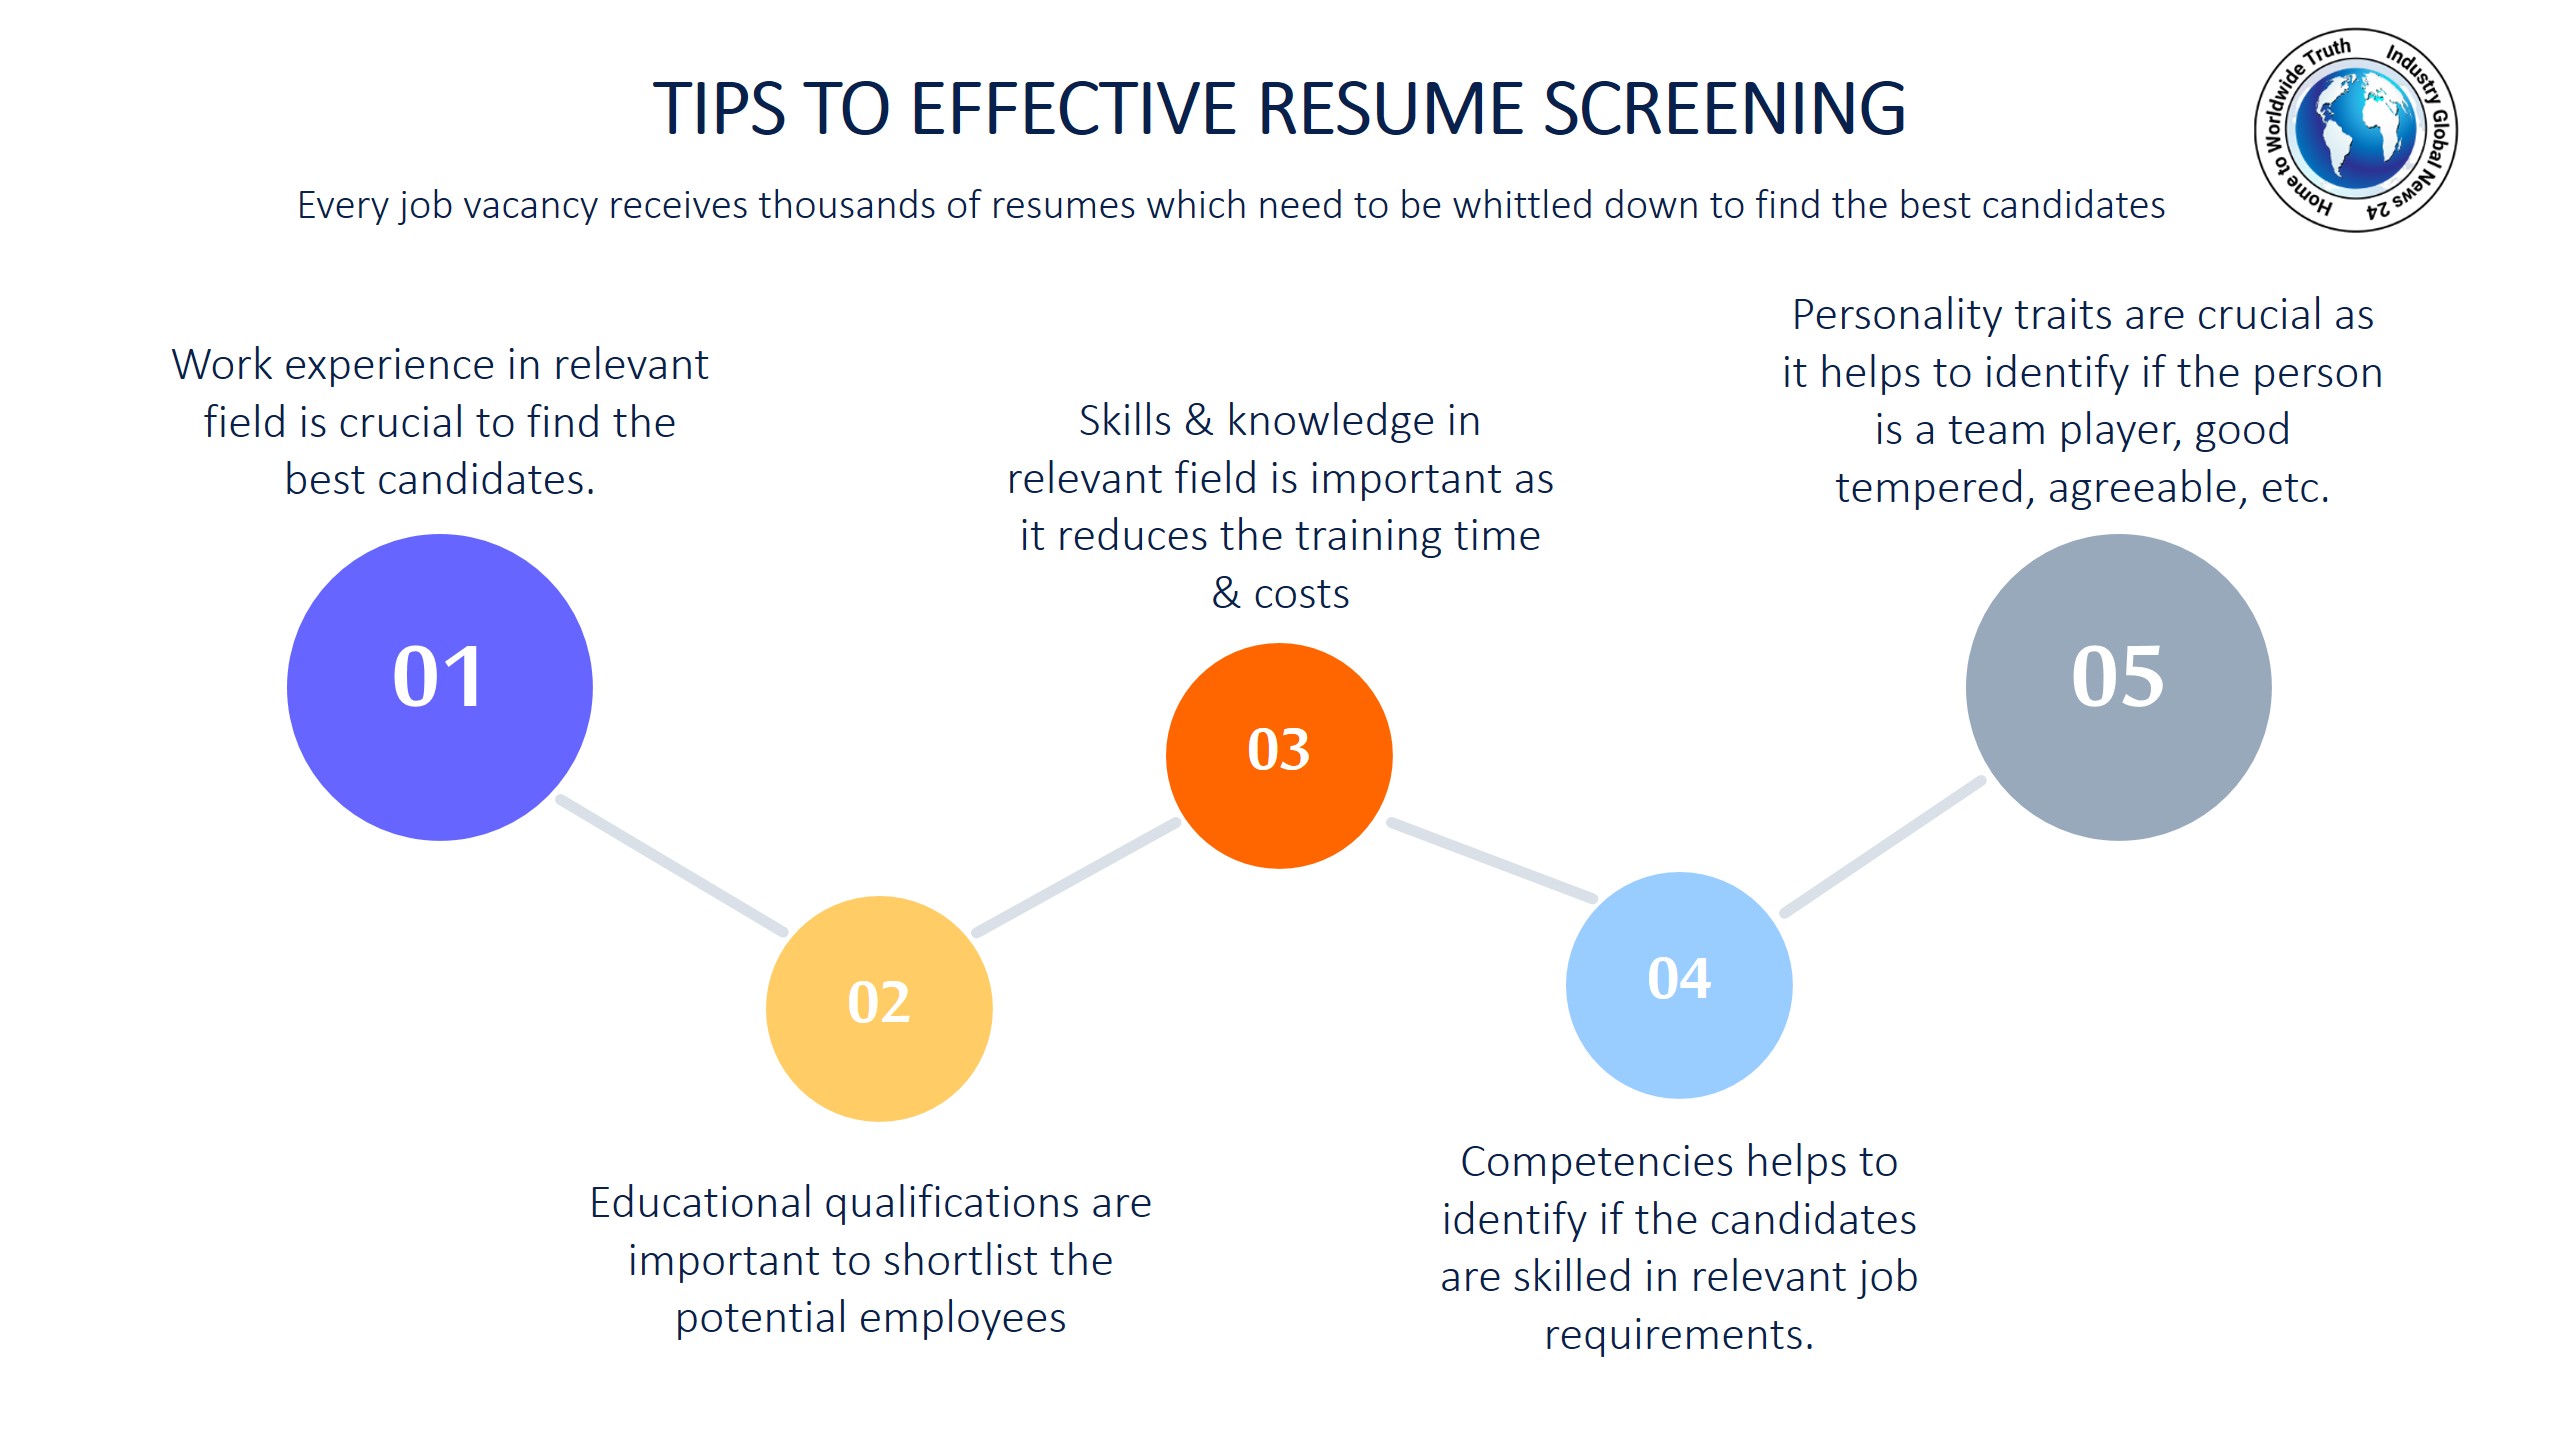 Tips to effective resume screening